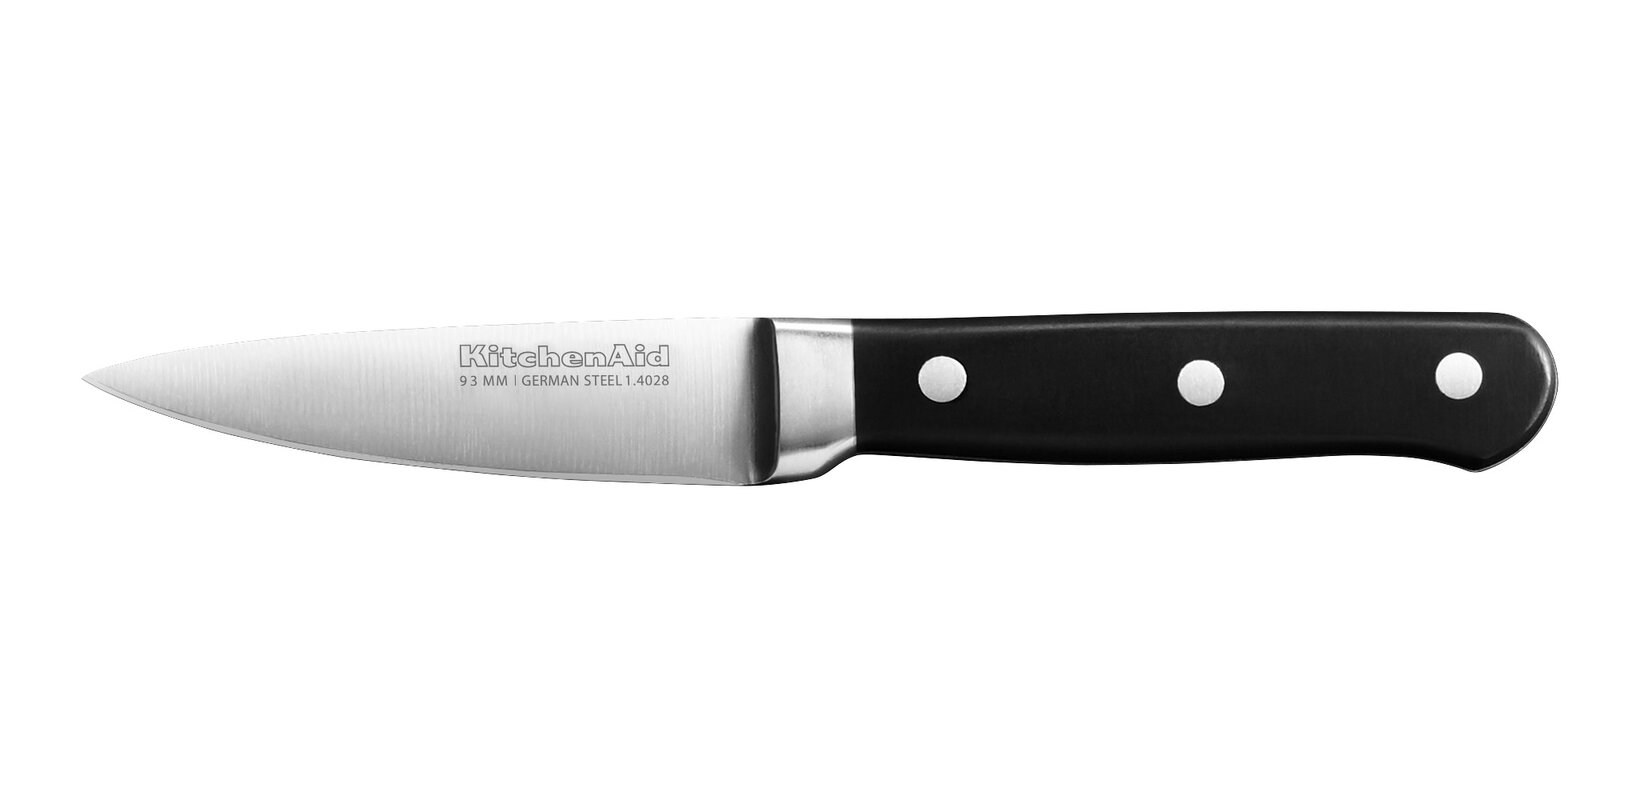 KitchenAid Classic 35 Forged Triple Rivet Paring Knife Reviews